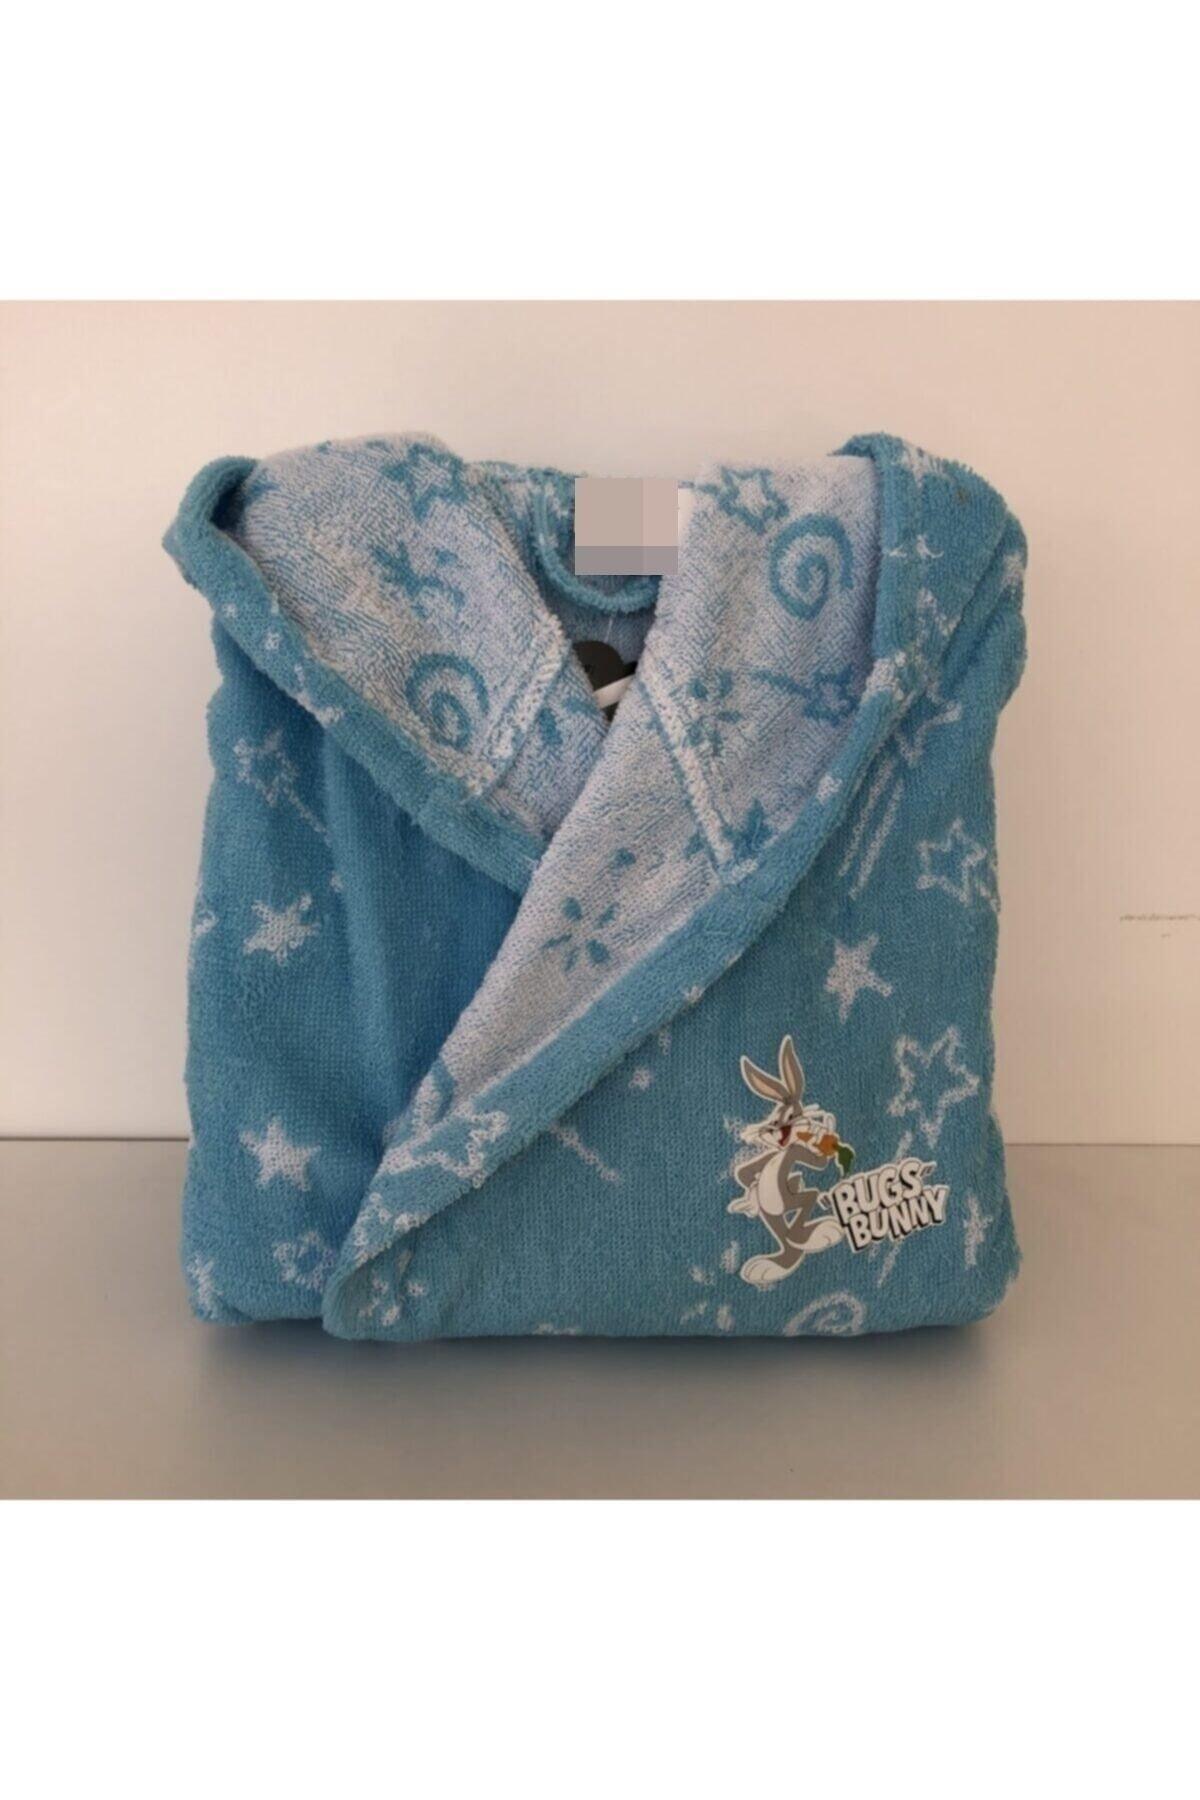 Bugs Bunny Galaxy Blue Free Towel Bathrobe Set 7/8 Age - Swordslife